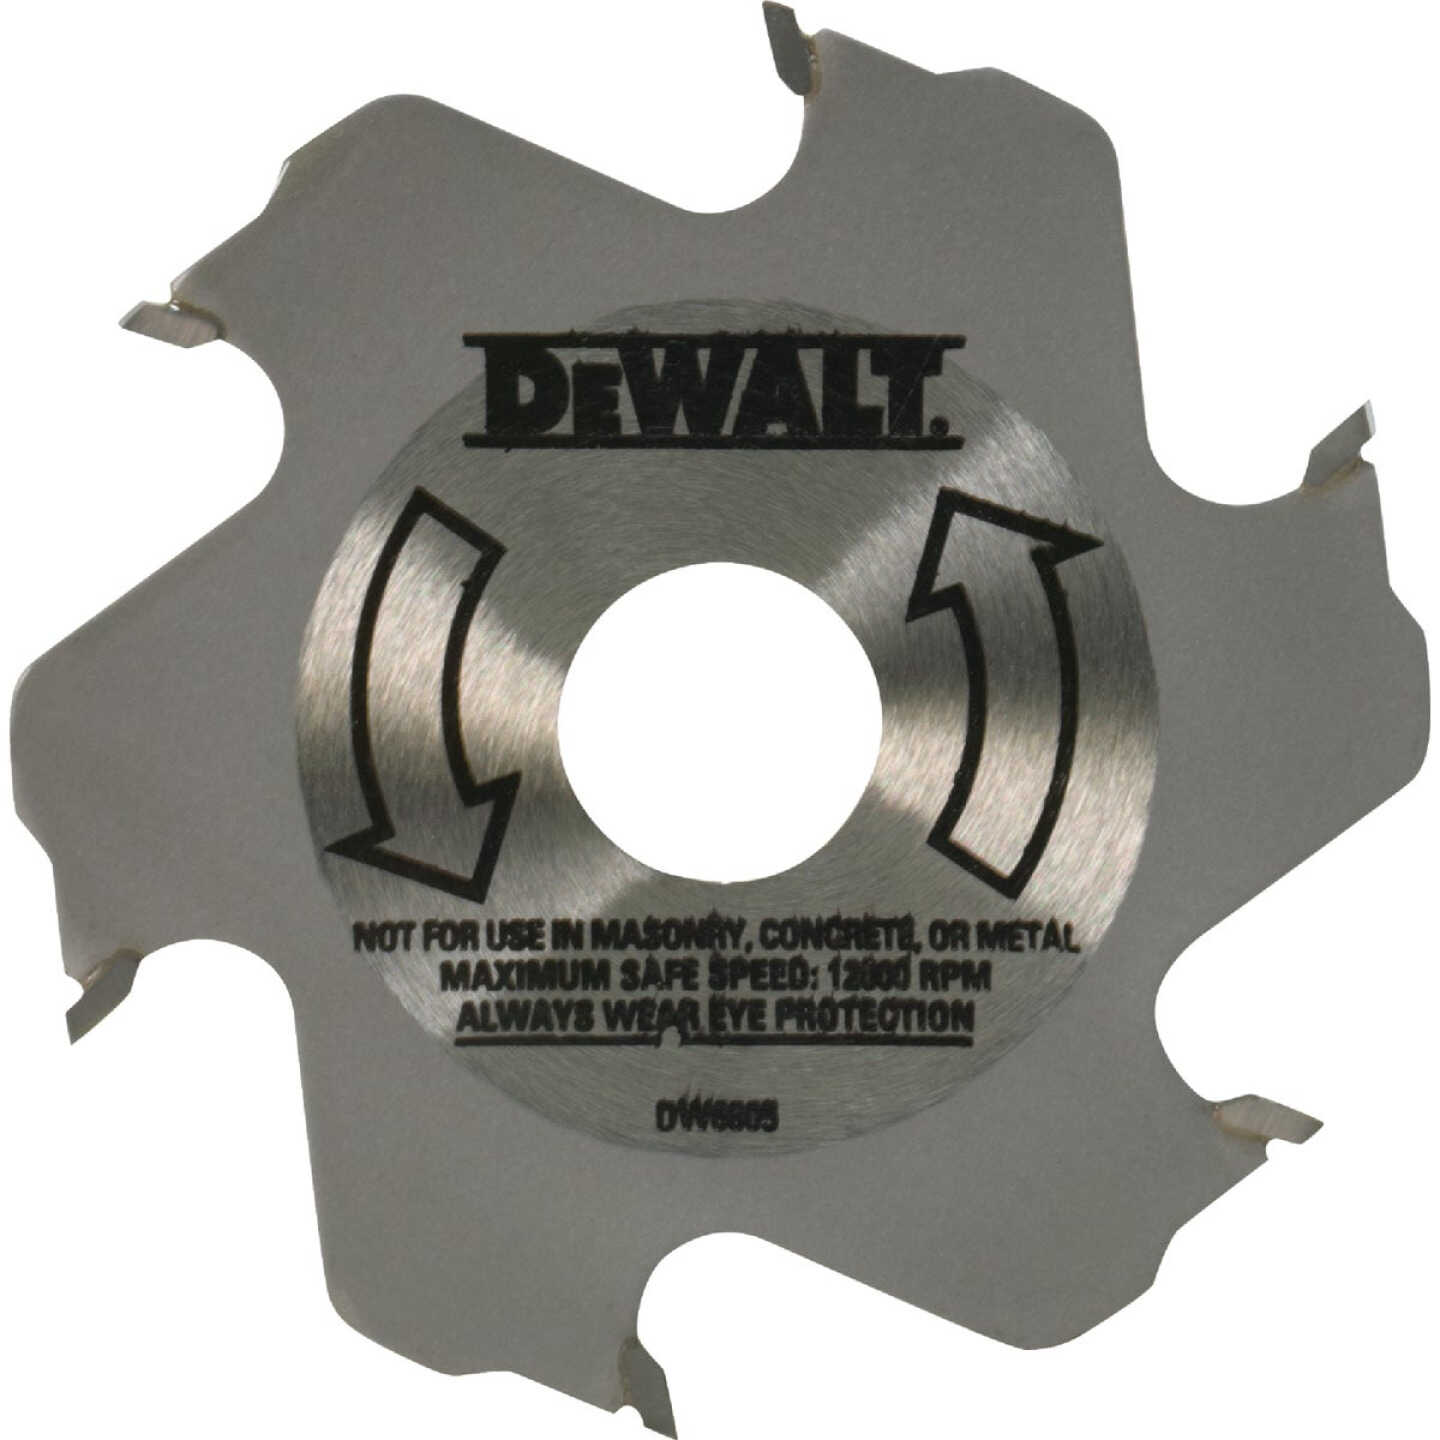 DeWalt 4 In. 6-Tooth Carbide Plate Joiner Blade Image 1